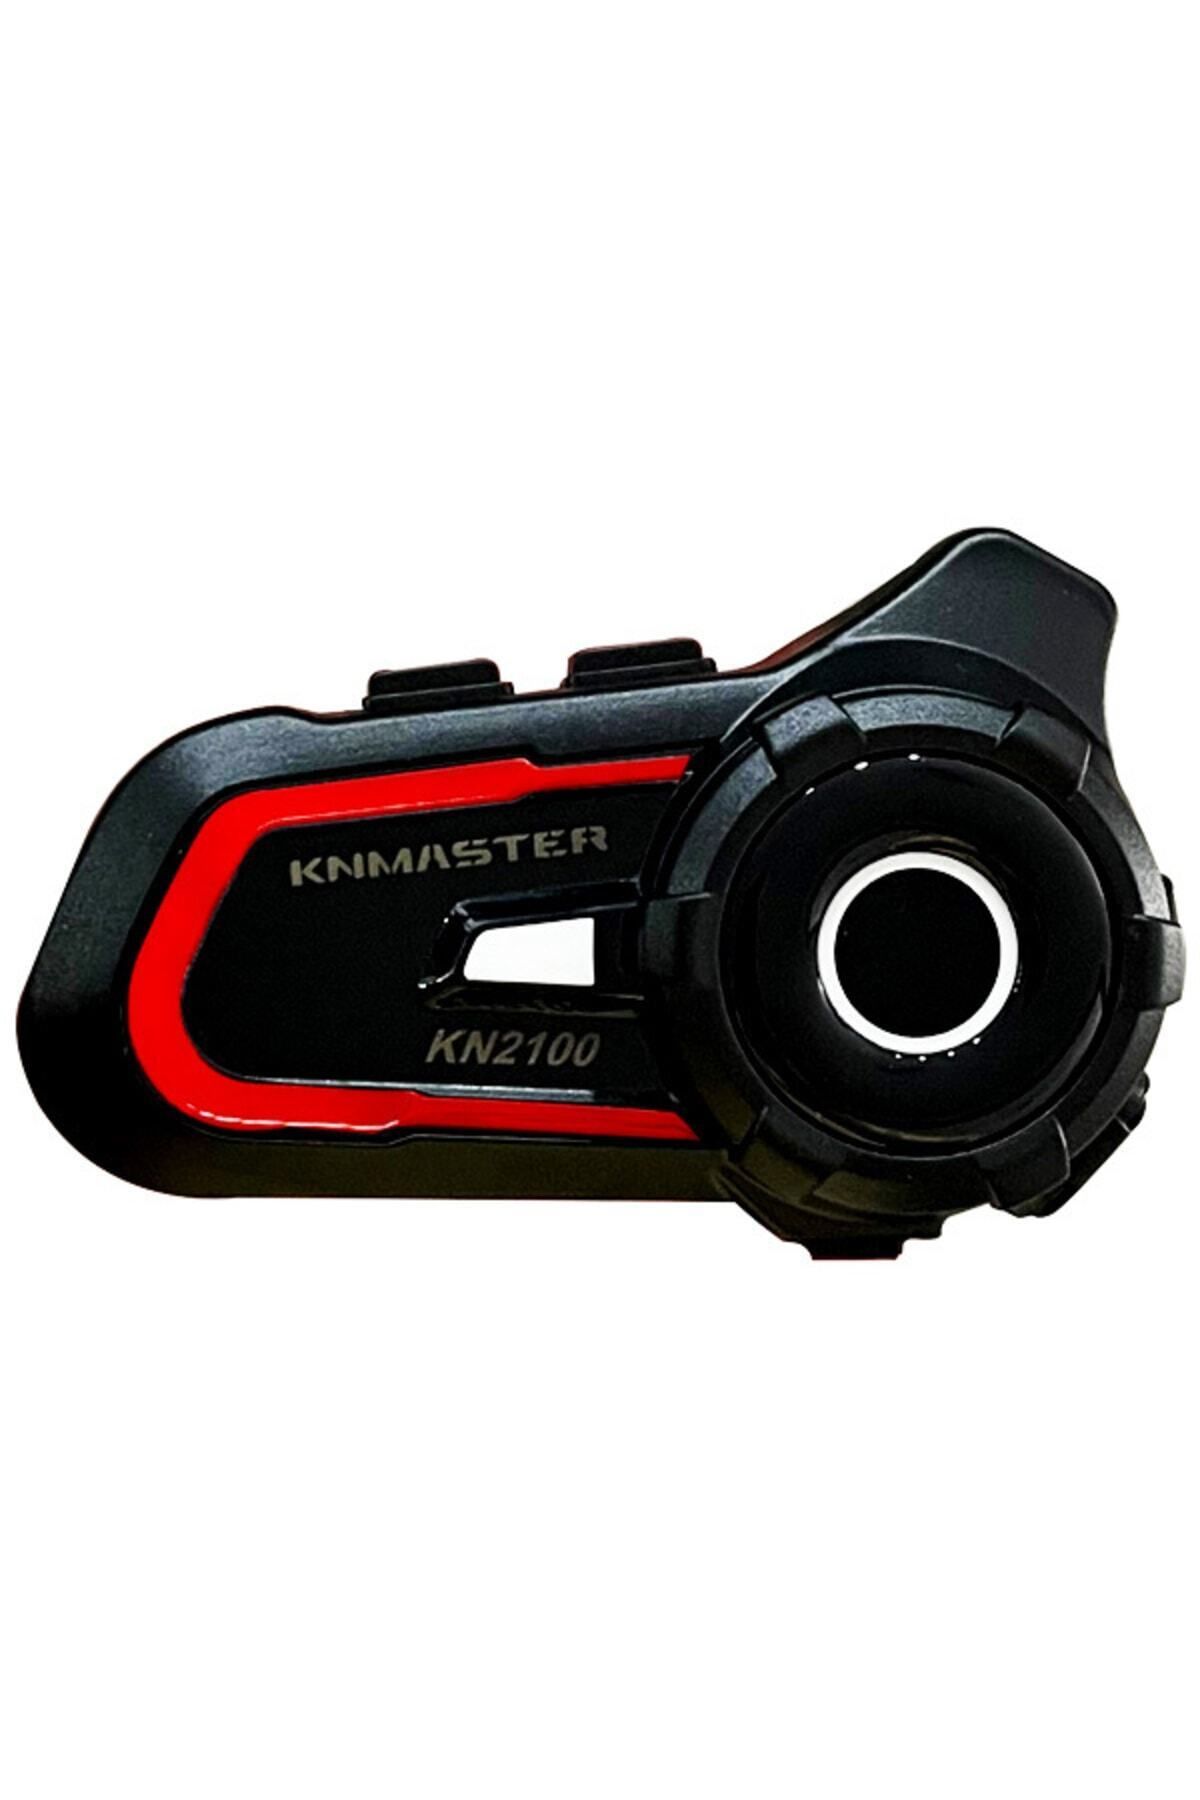 Knmaster Kn2100 Motosiklet Kask Interkom Bluetooth Intercom Kulaklık Seti Kırmızı